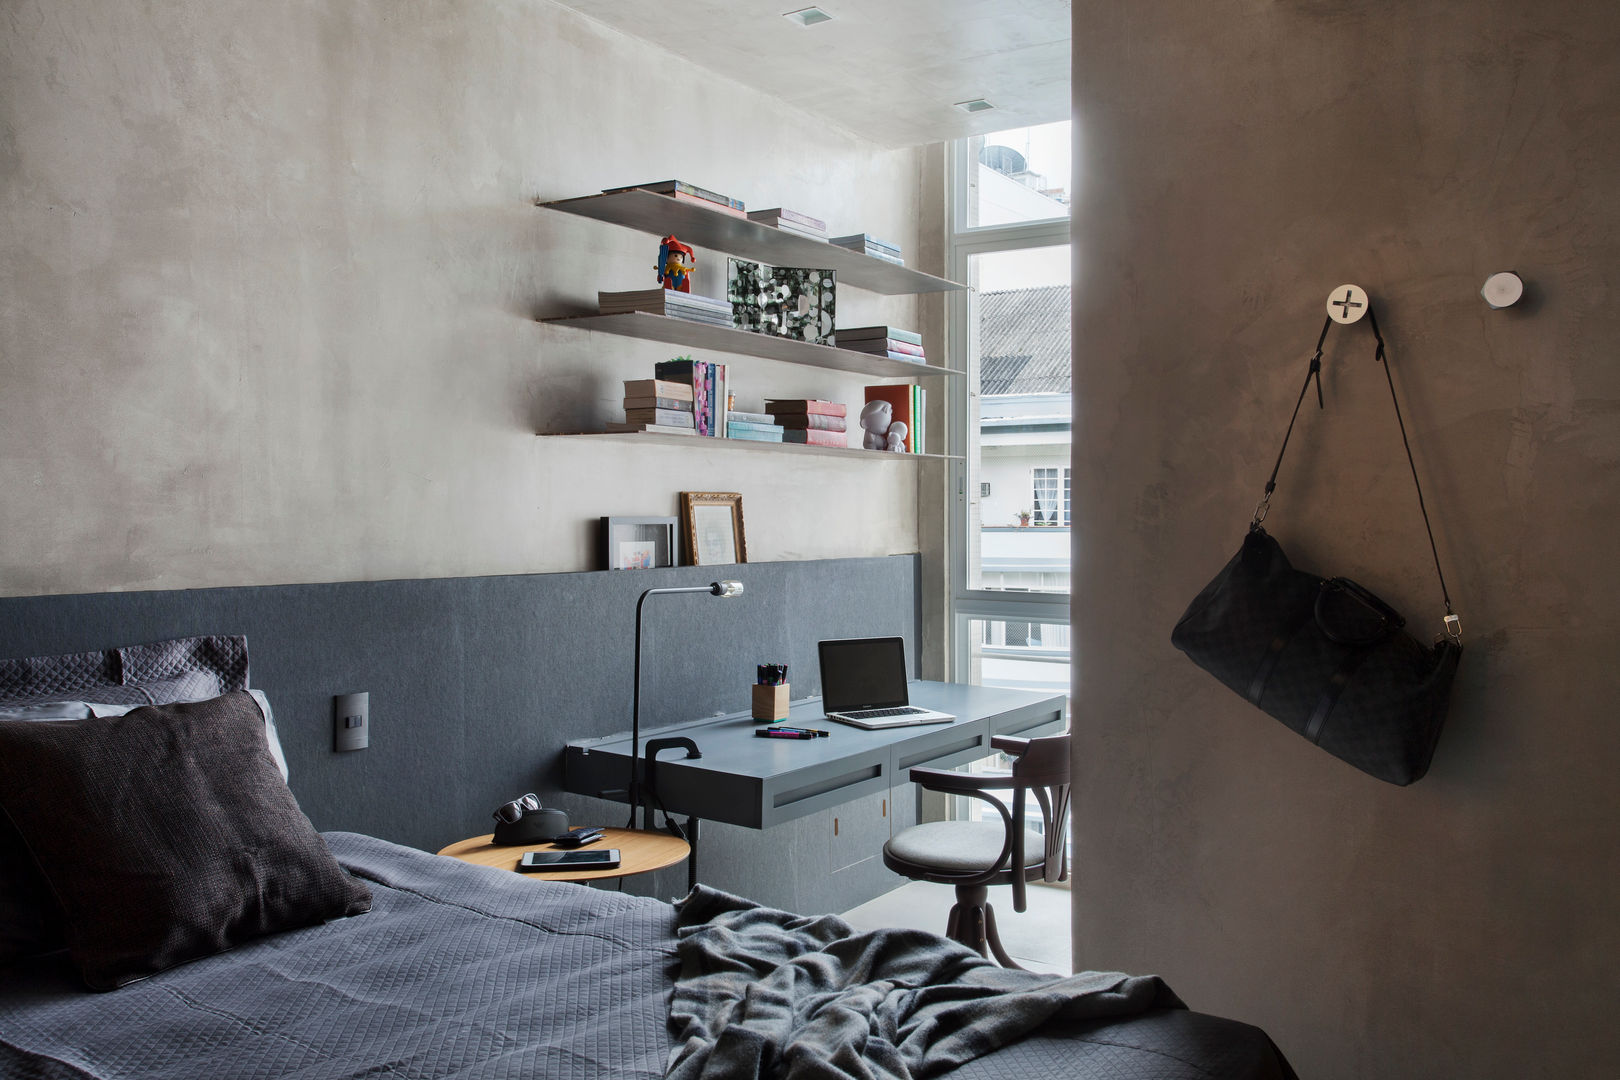 MM apartment, Studio ro+ca Studio ro+ca Industrial style bedroom